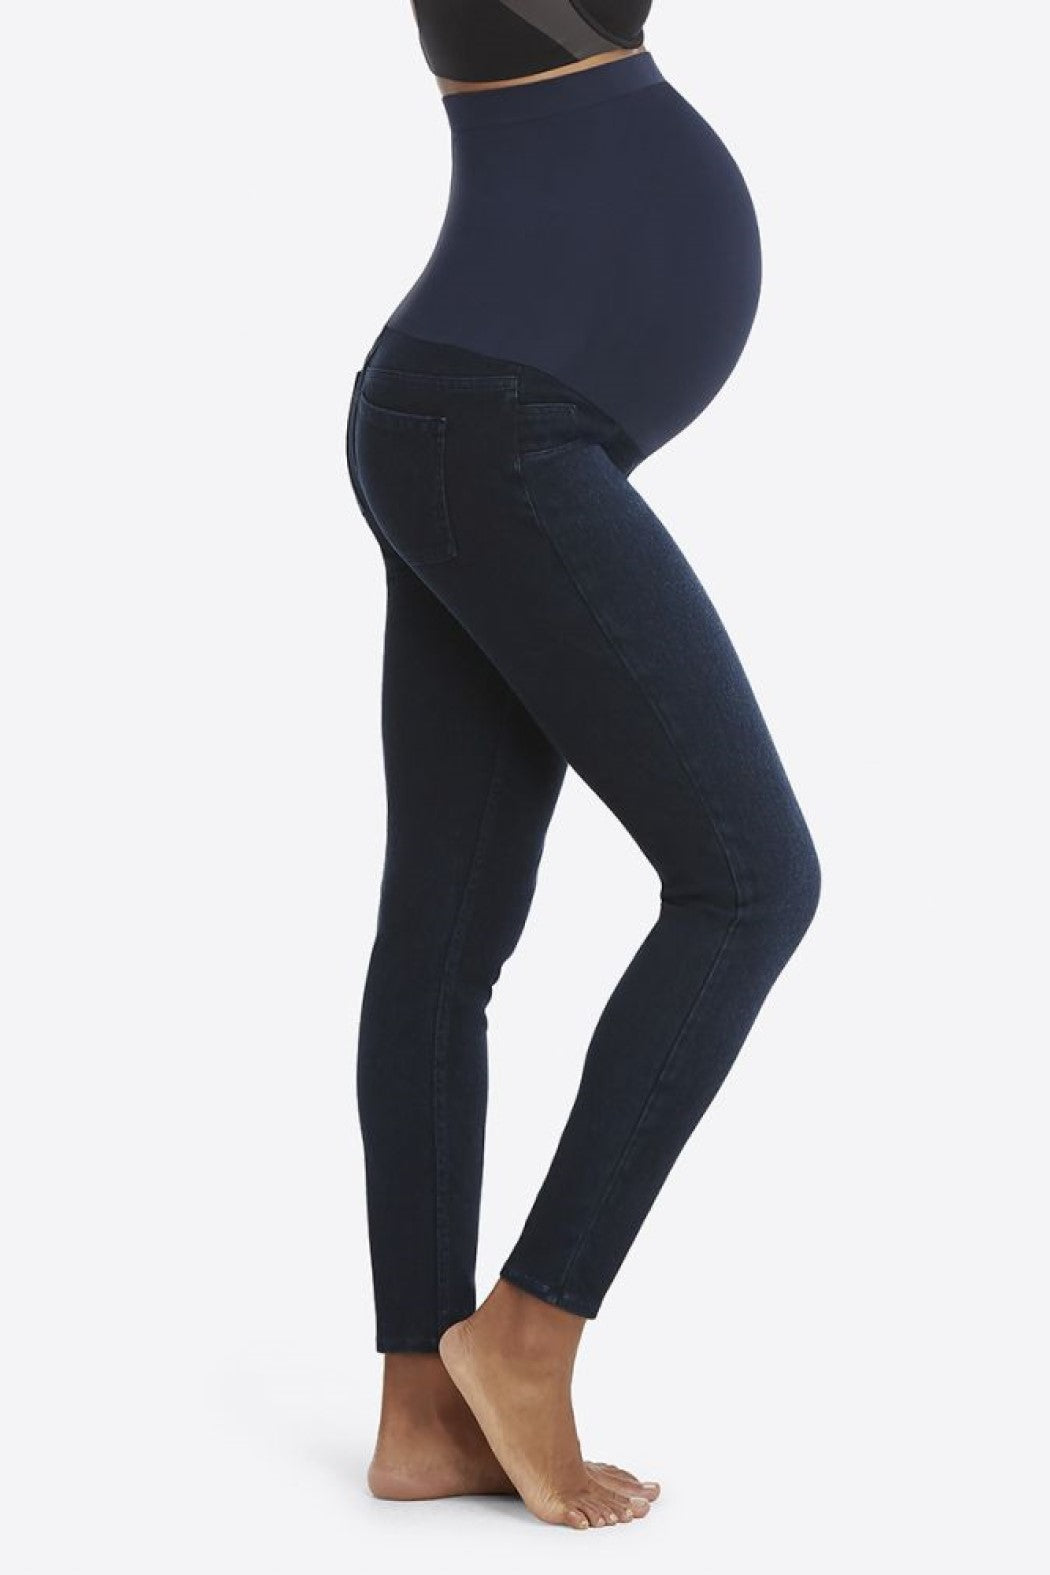 SPANX | Pants & Jumpsuits | Spanx Maternity Black Leggings | Poshmark